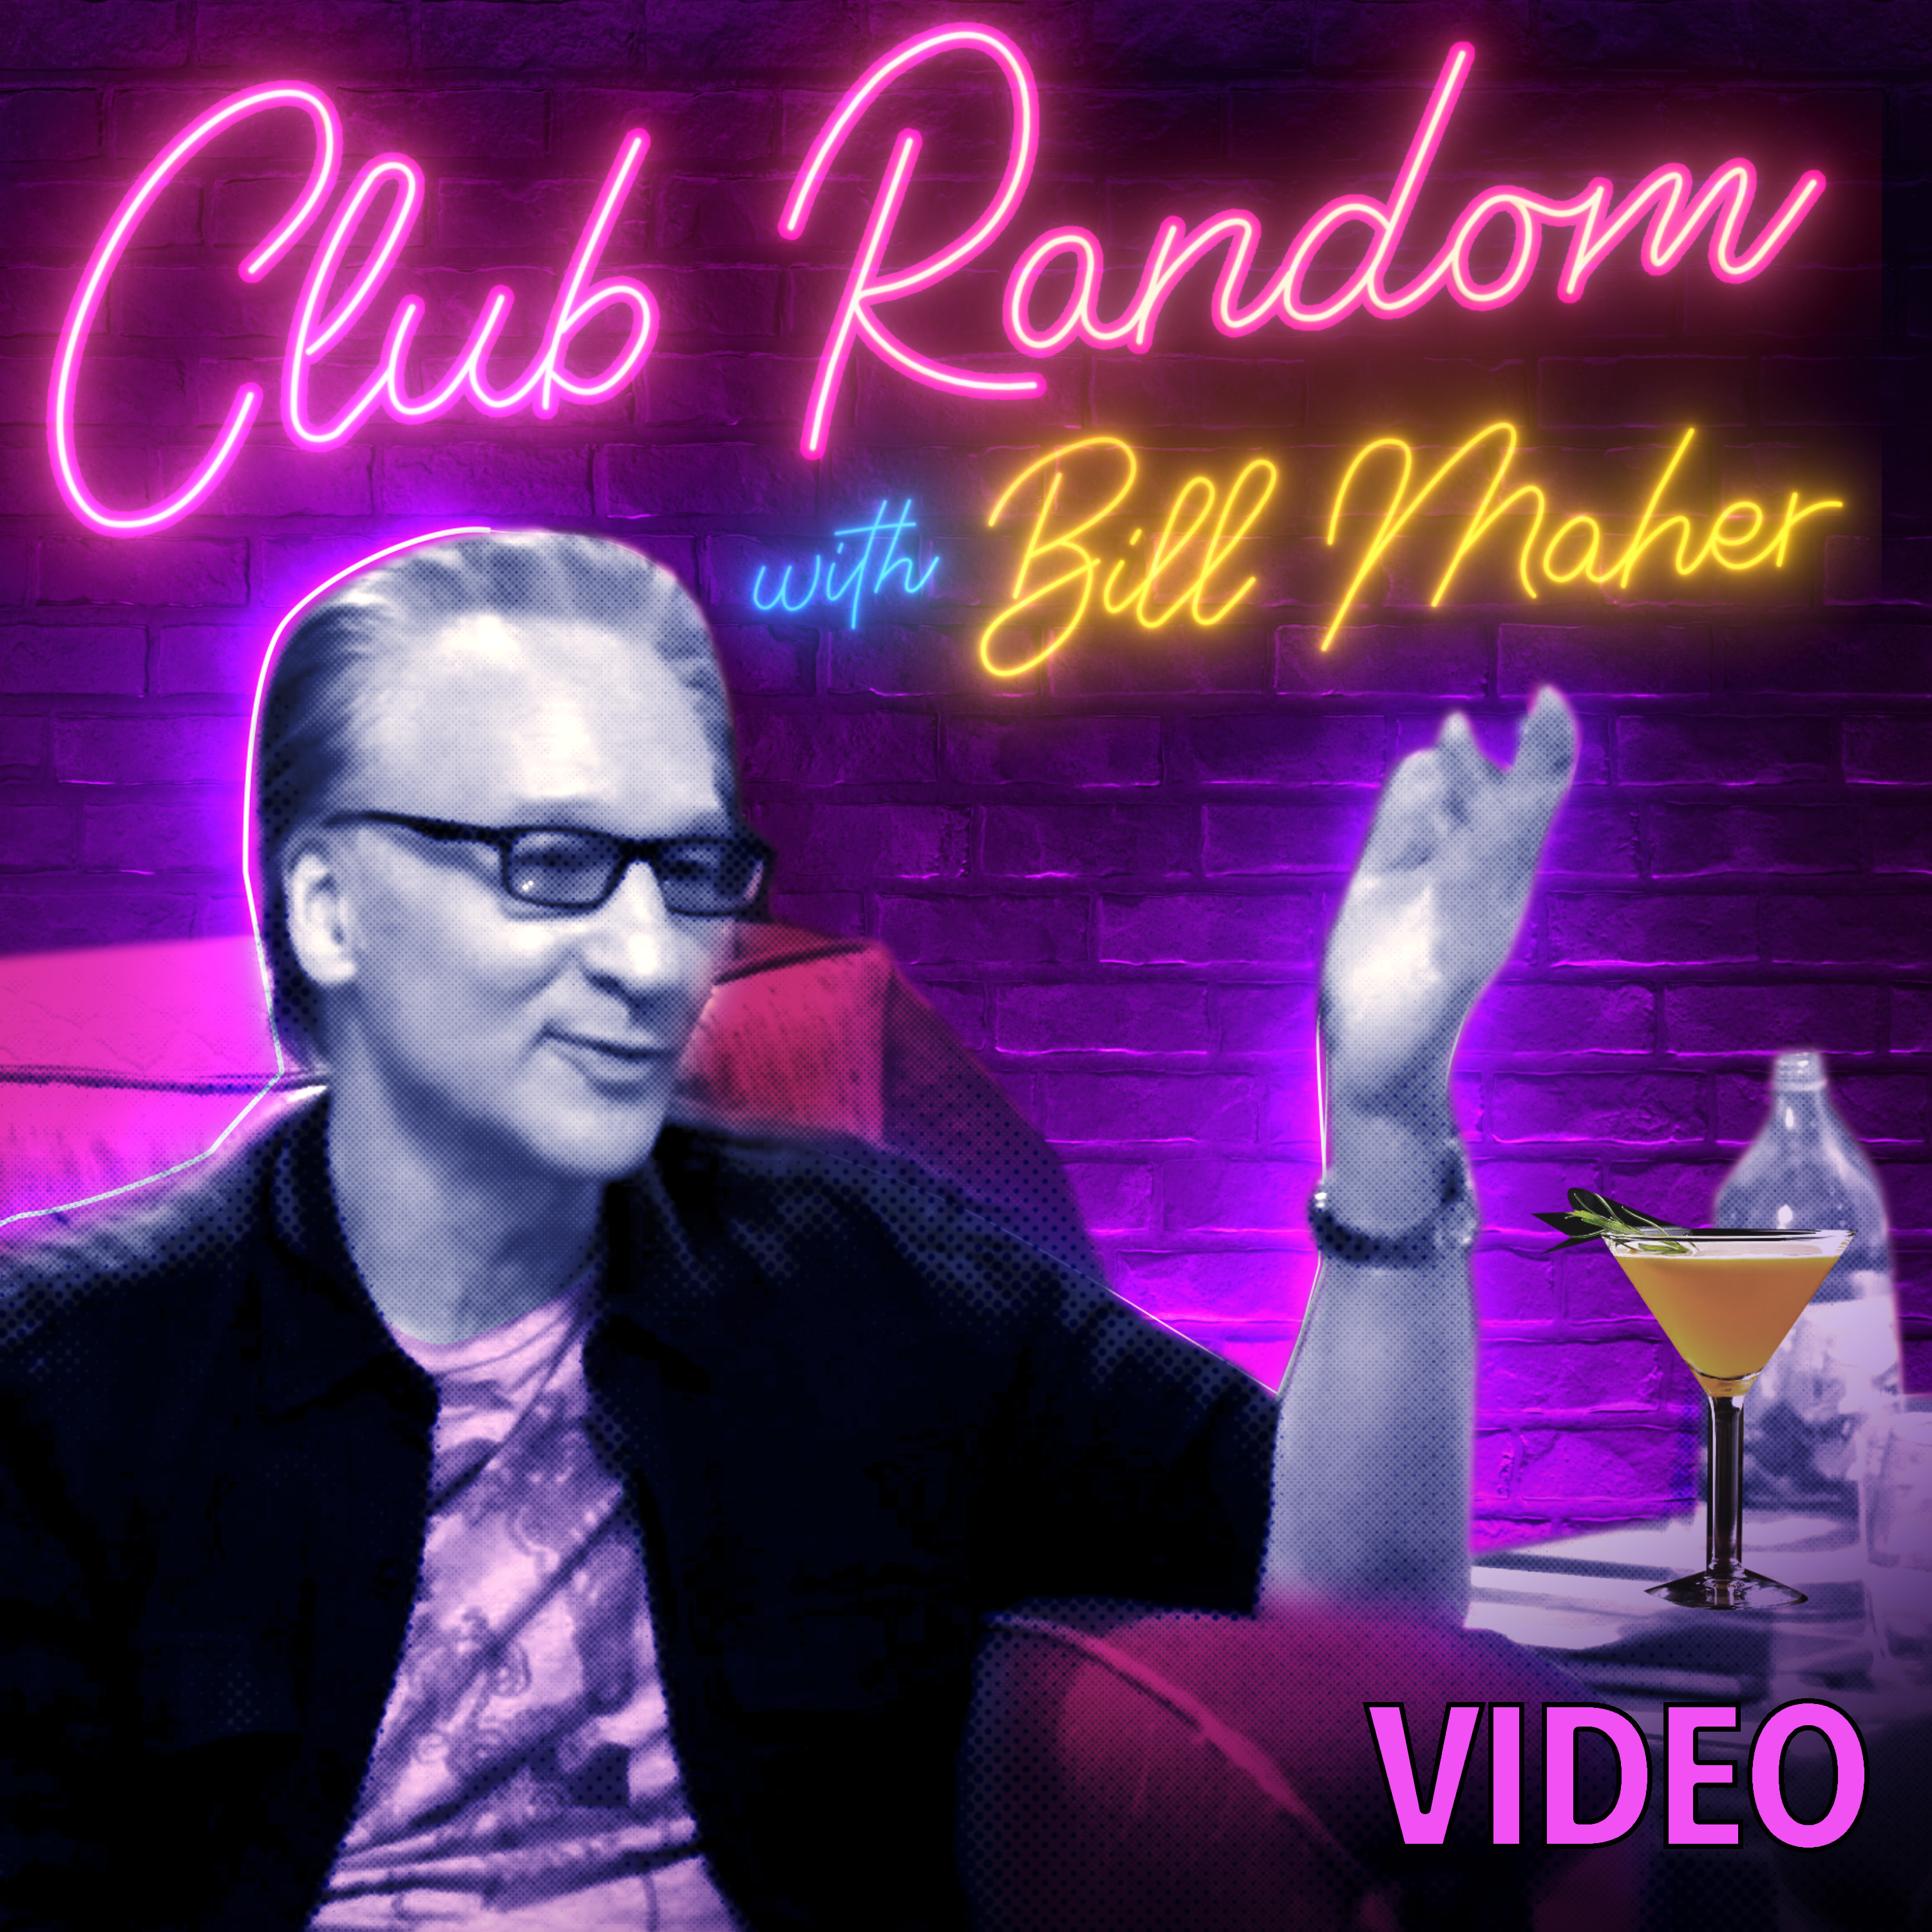 Video: Steven Van Zandt | Club Random with Bill Maher